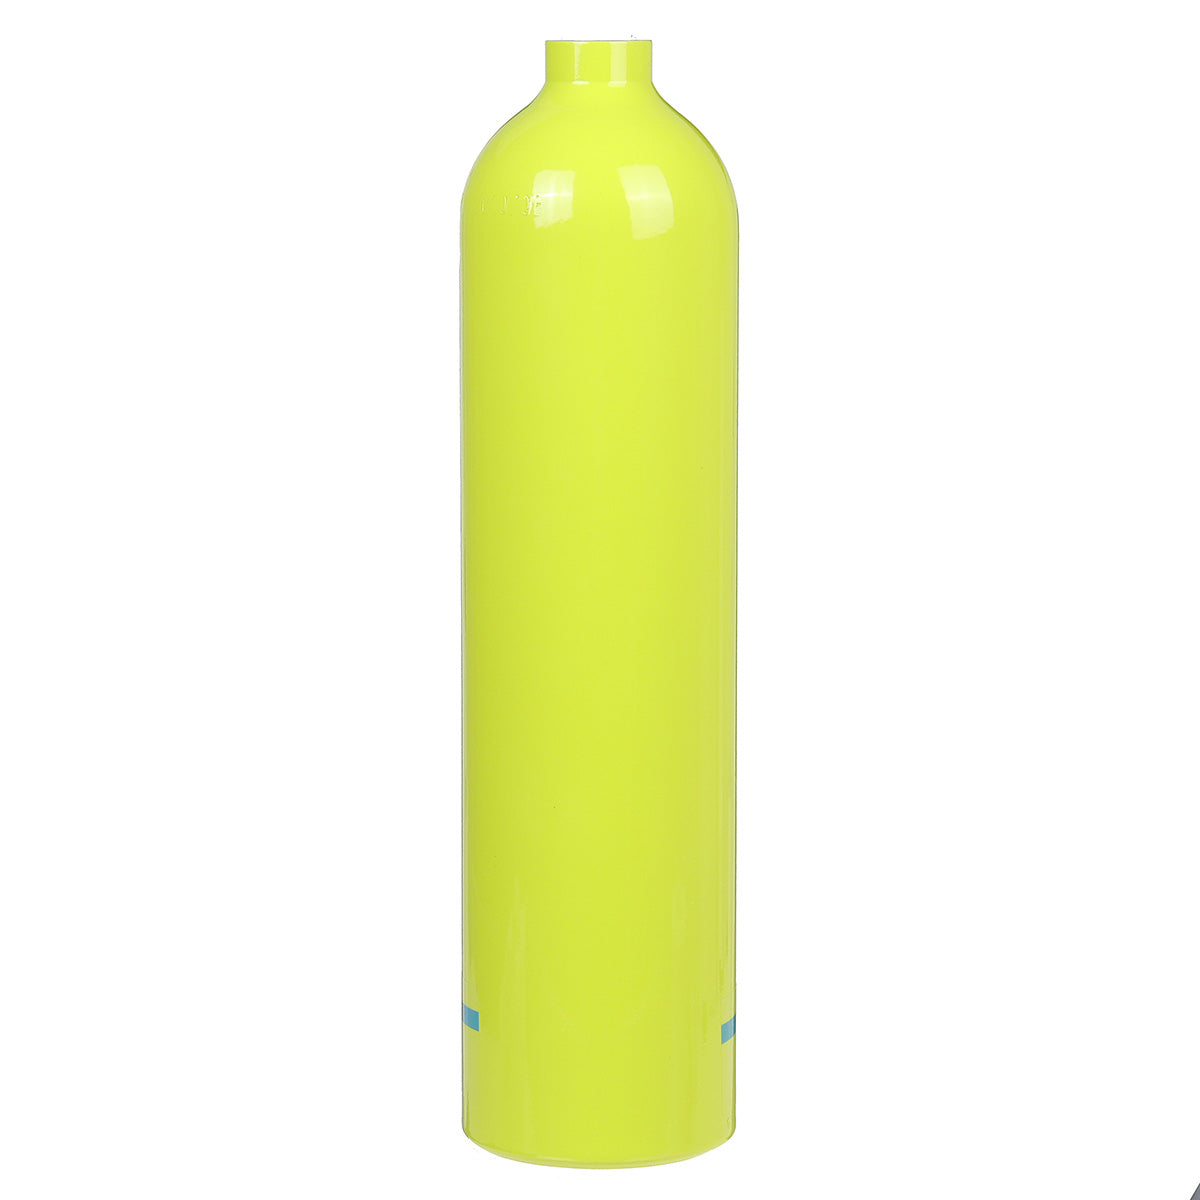 Green Yellow 1L Scuba Diving Oxygen Cylinder Air Tank Breathing Valve Diving Equipment+Bag